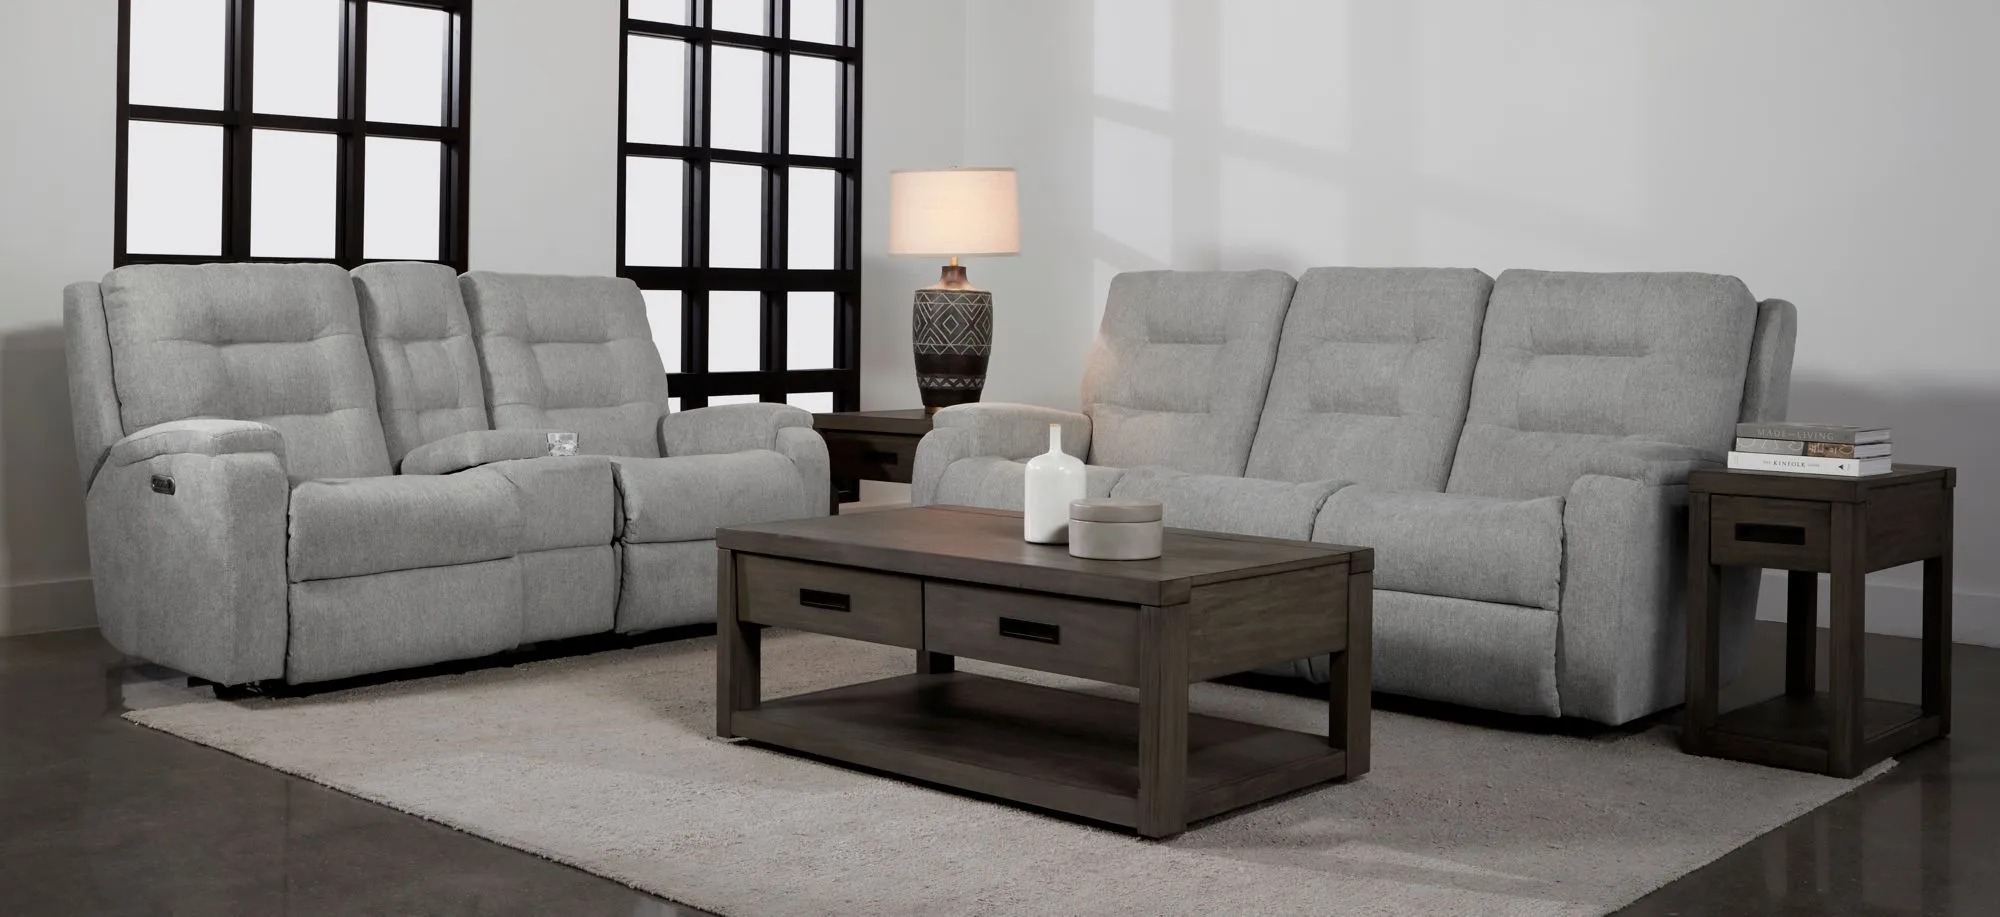 Halenbeck Living Room Set in Light Gray by Flexsteel